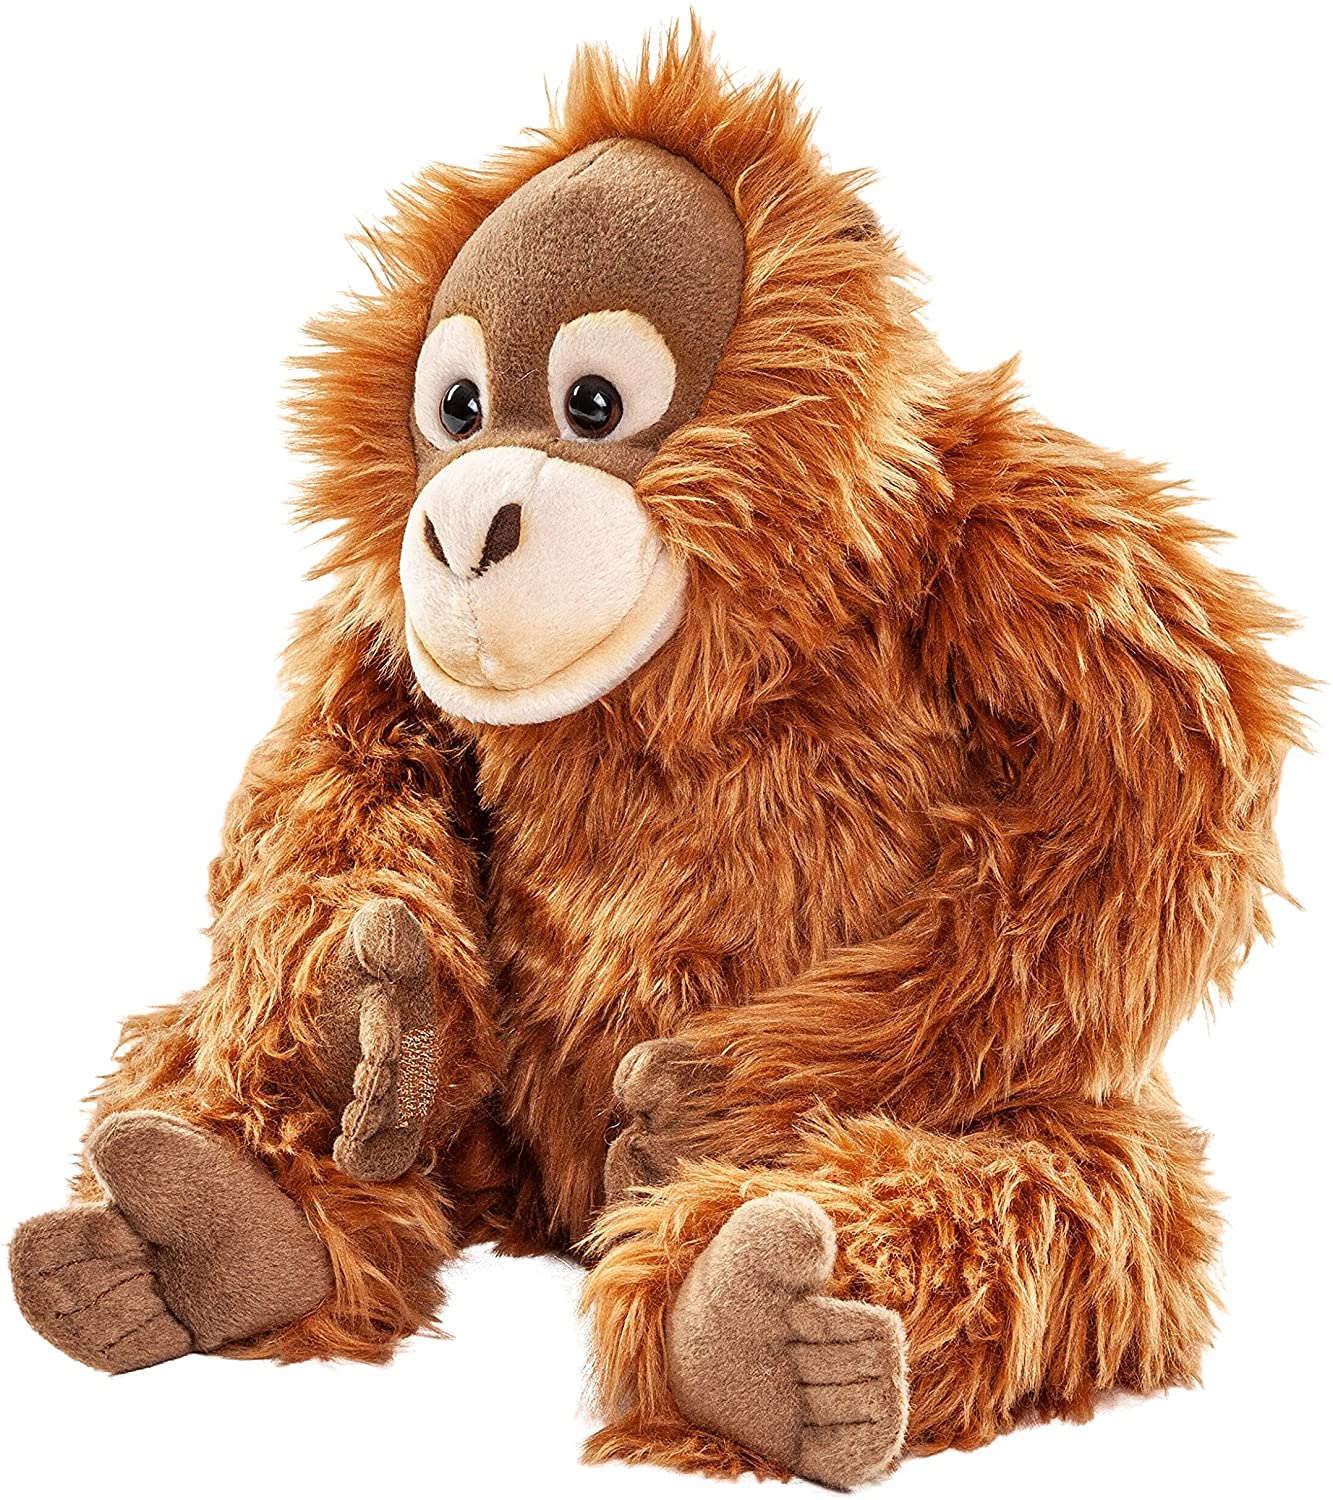 orangutan with Velcro on the hands - 28 cm (height)